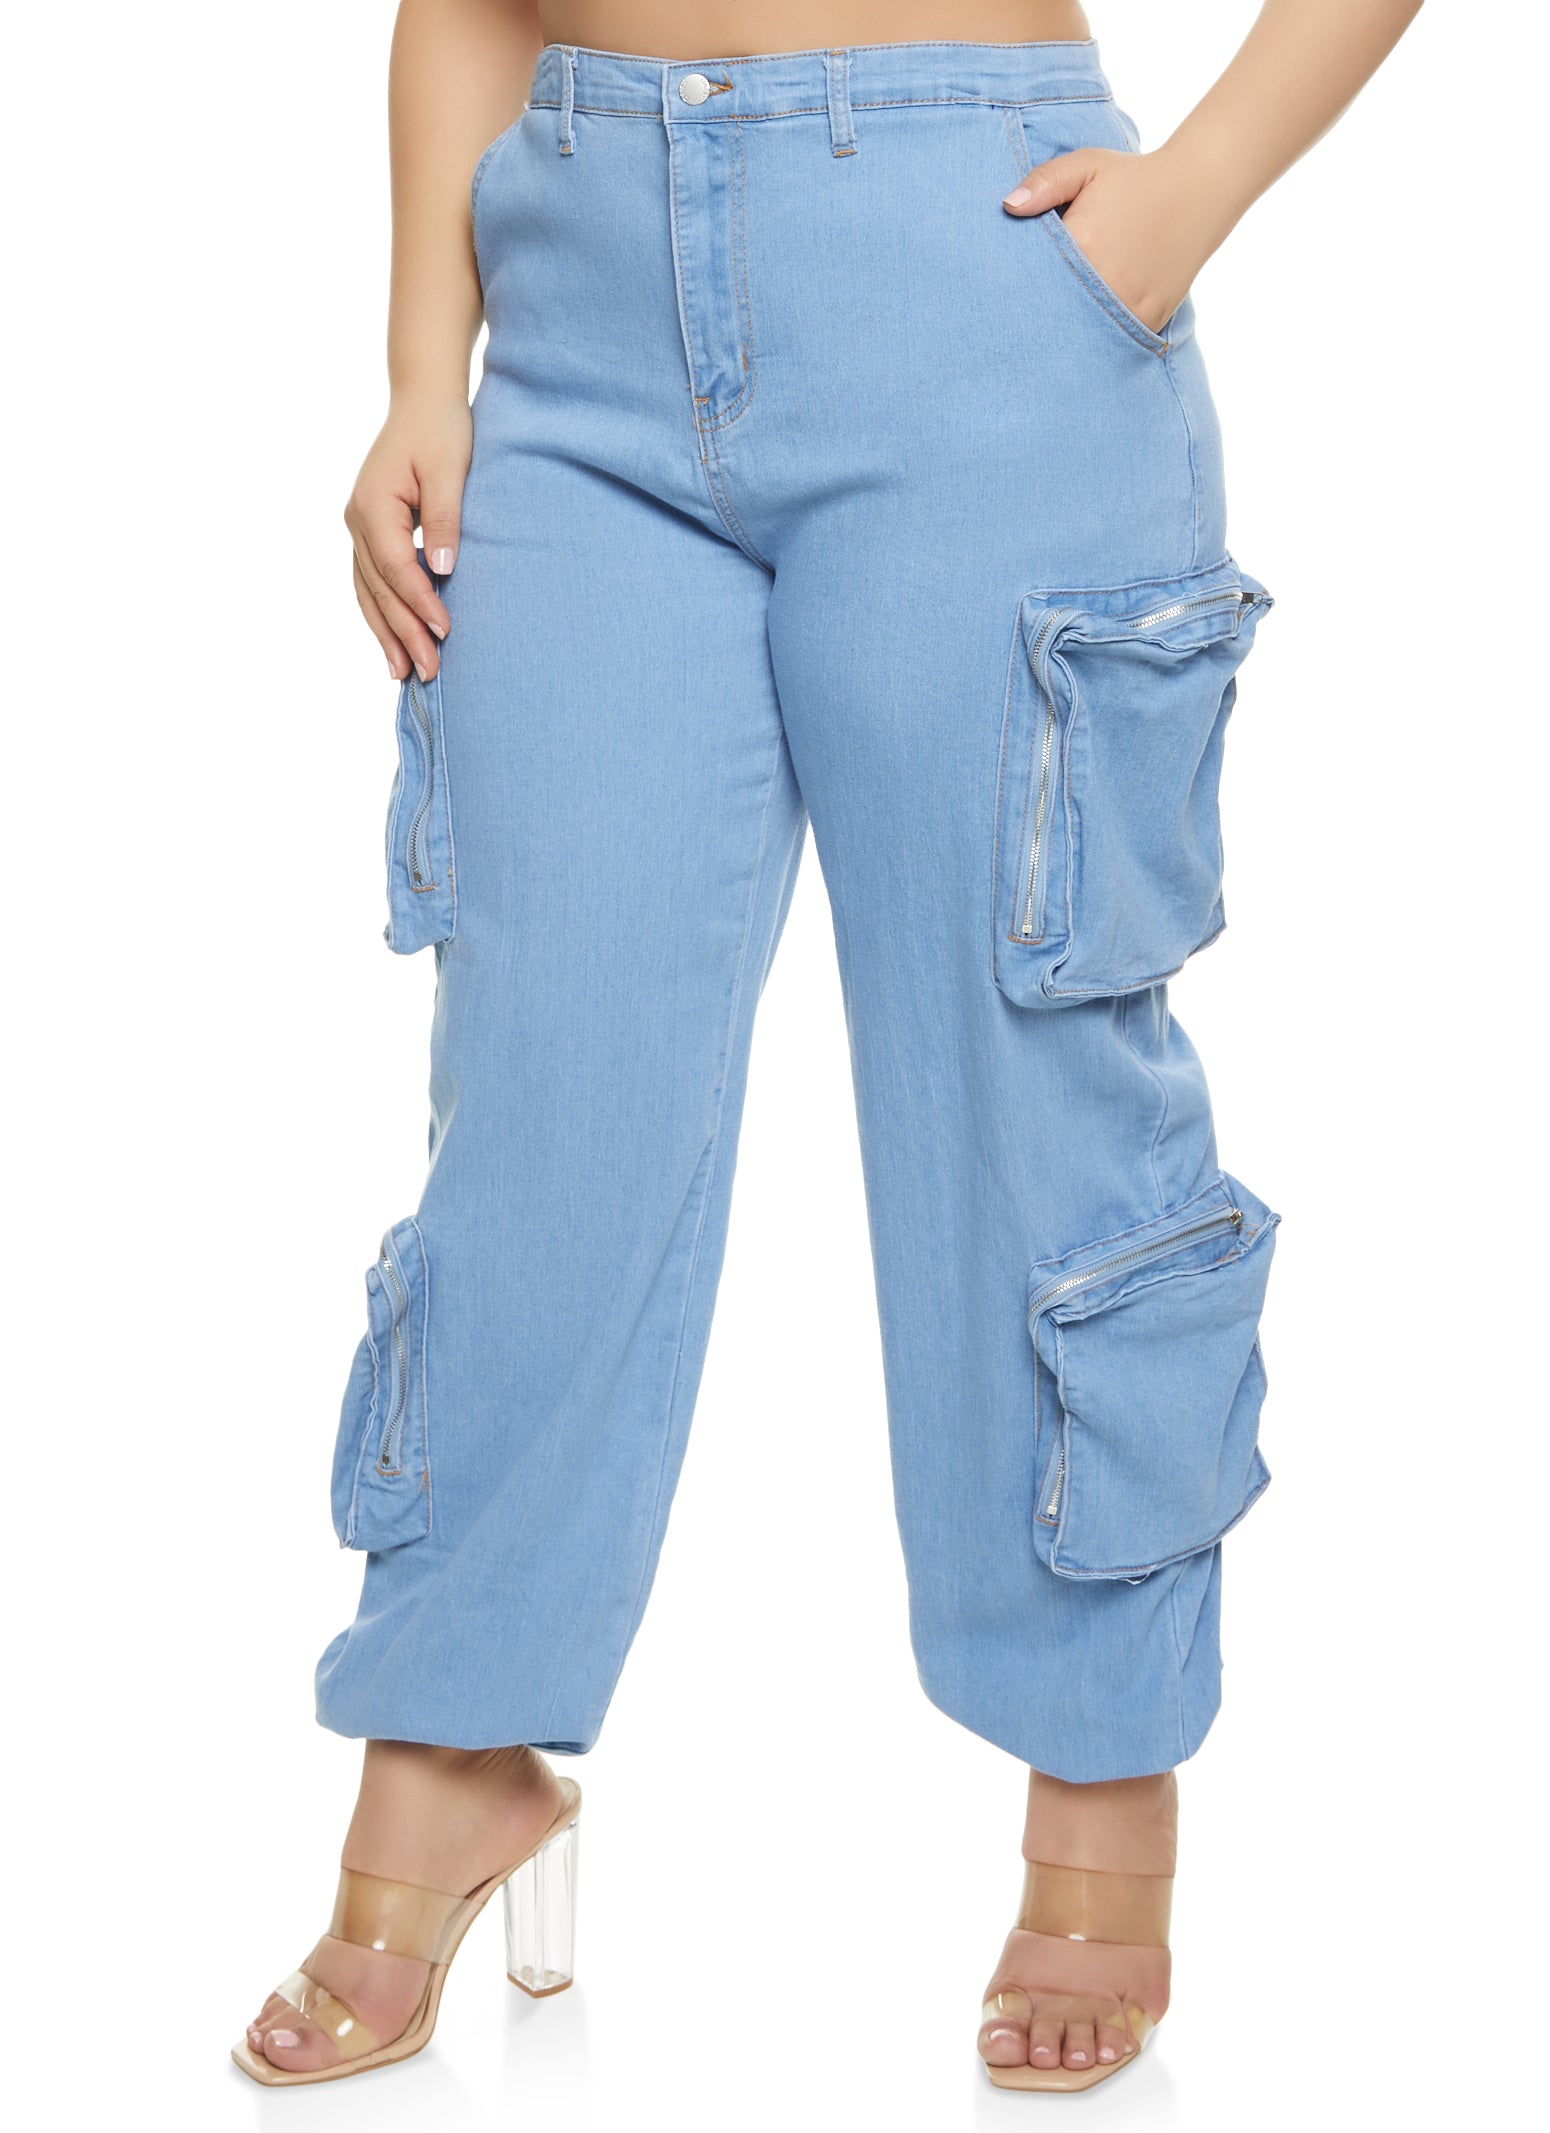 Rainbow Shops Womens Plus Size Zip Cargo Pocket Jeans, Blue, Size 1X